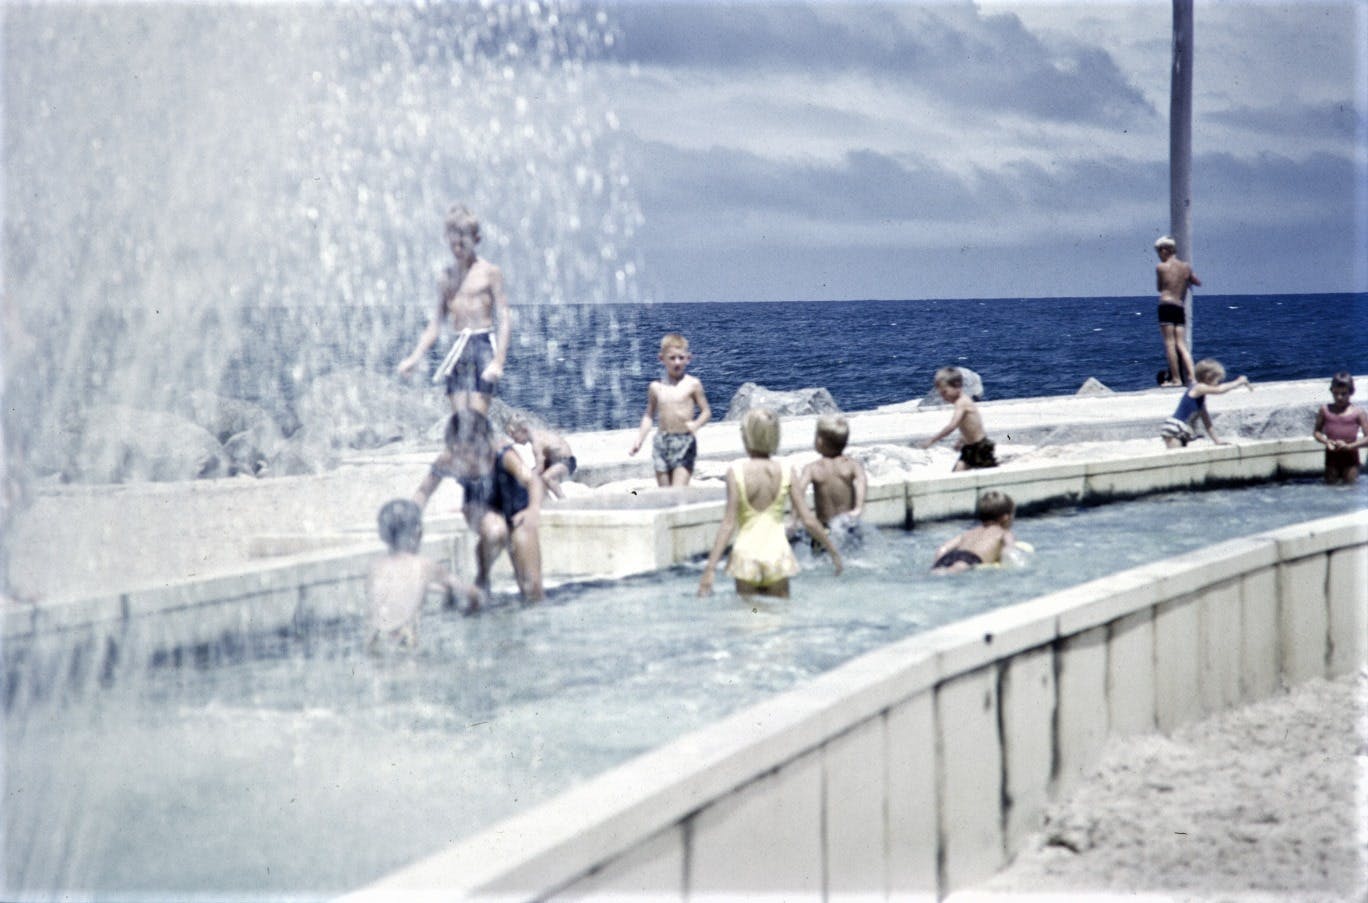 Perth Vintage Beaches Cottesloe Pool